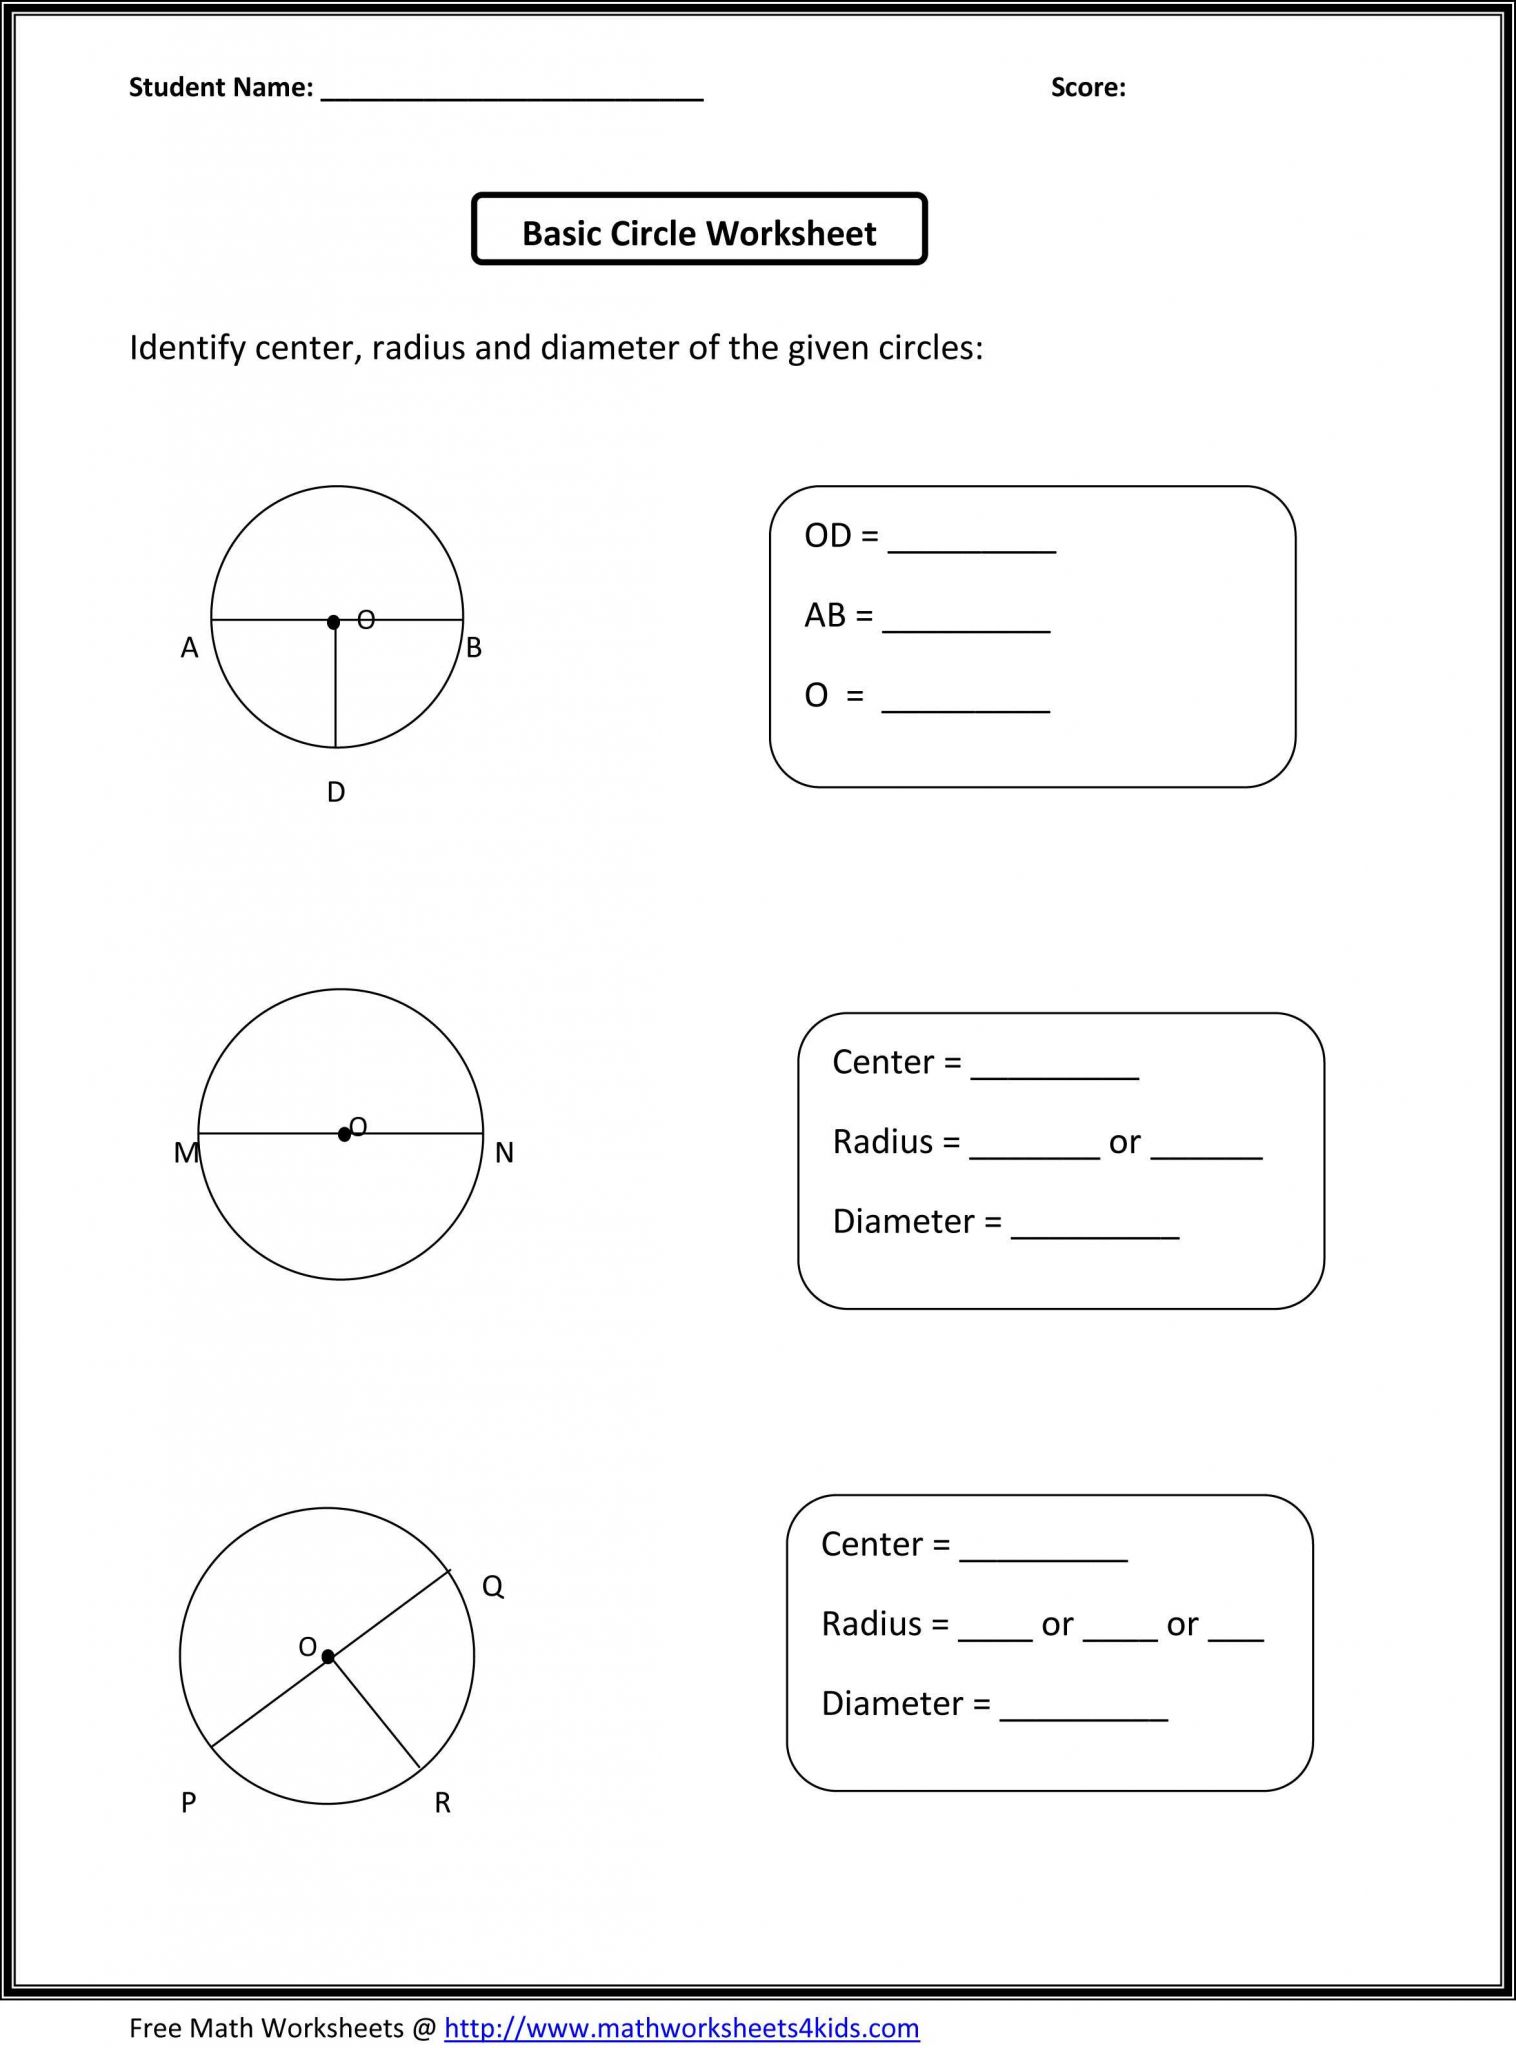 Graphing Sine and Cosine Practice Worksheet or 9th Grade Math Worksheets Unique Worksheet Geometry Worksheets High